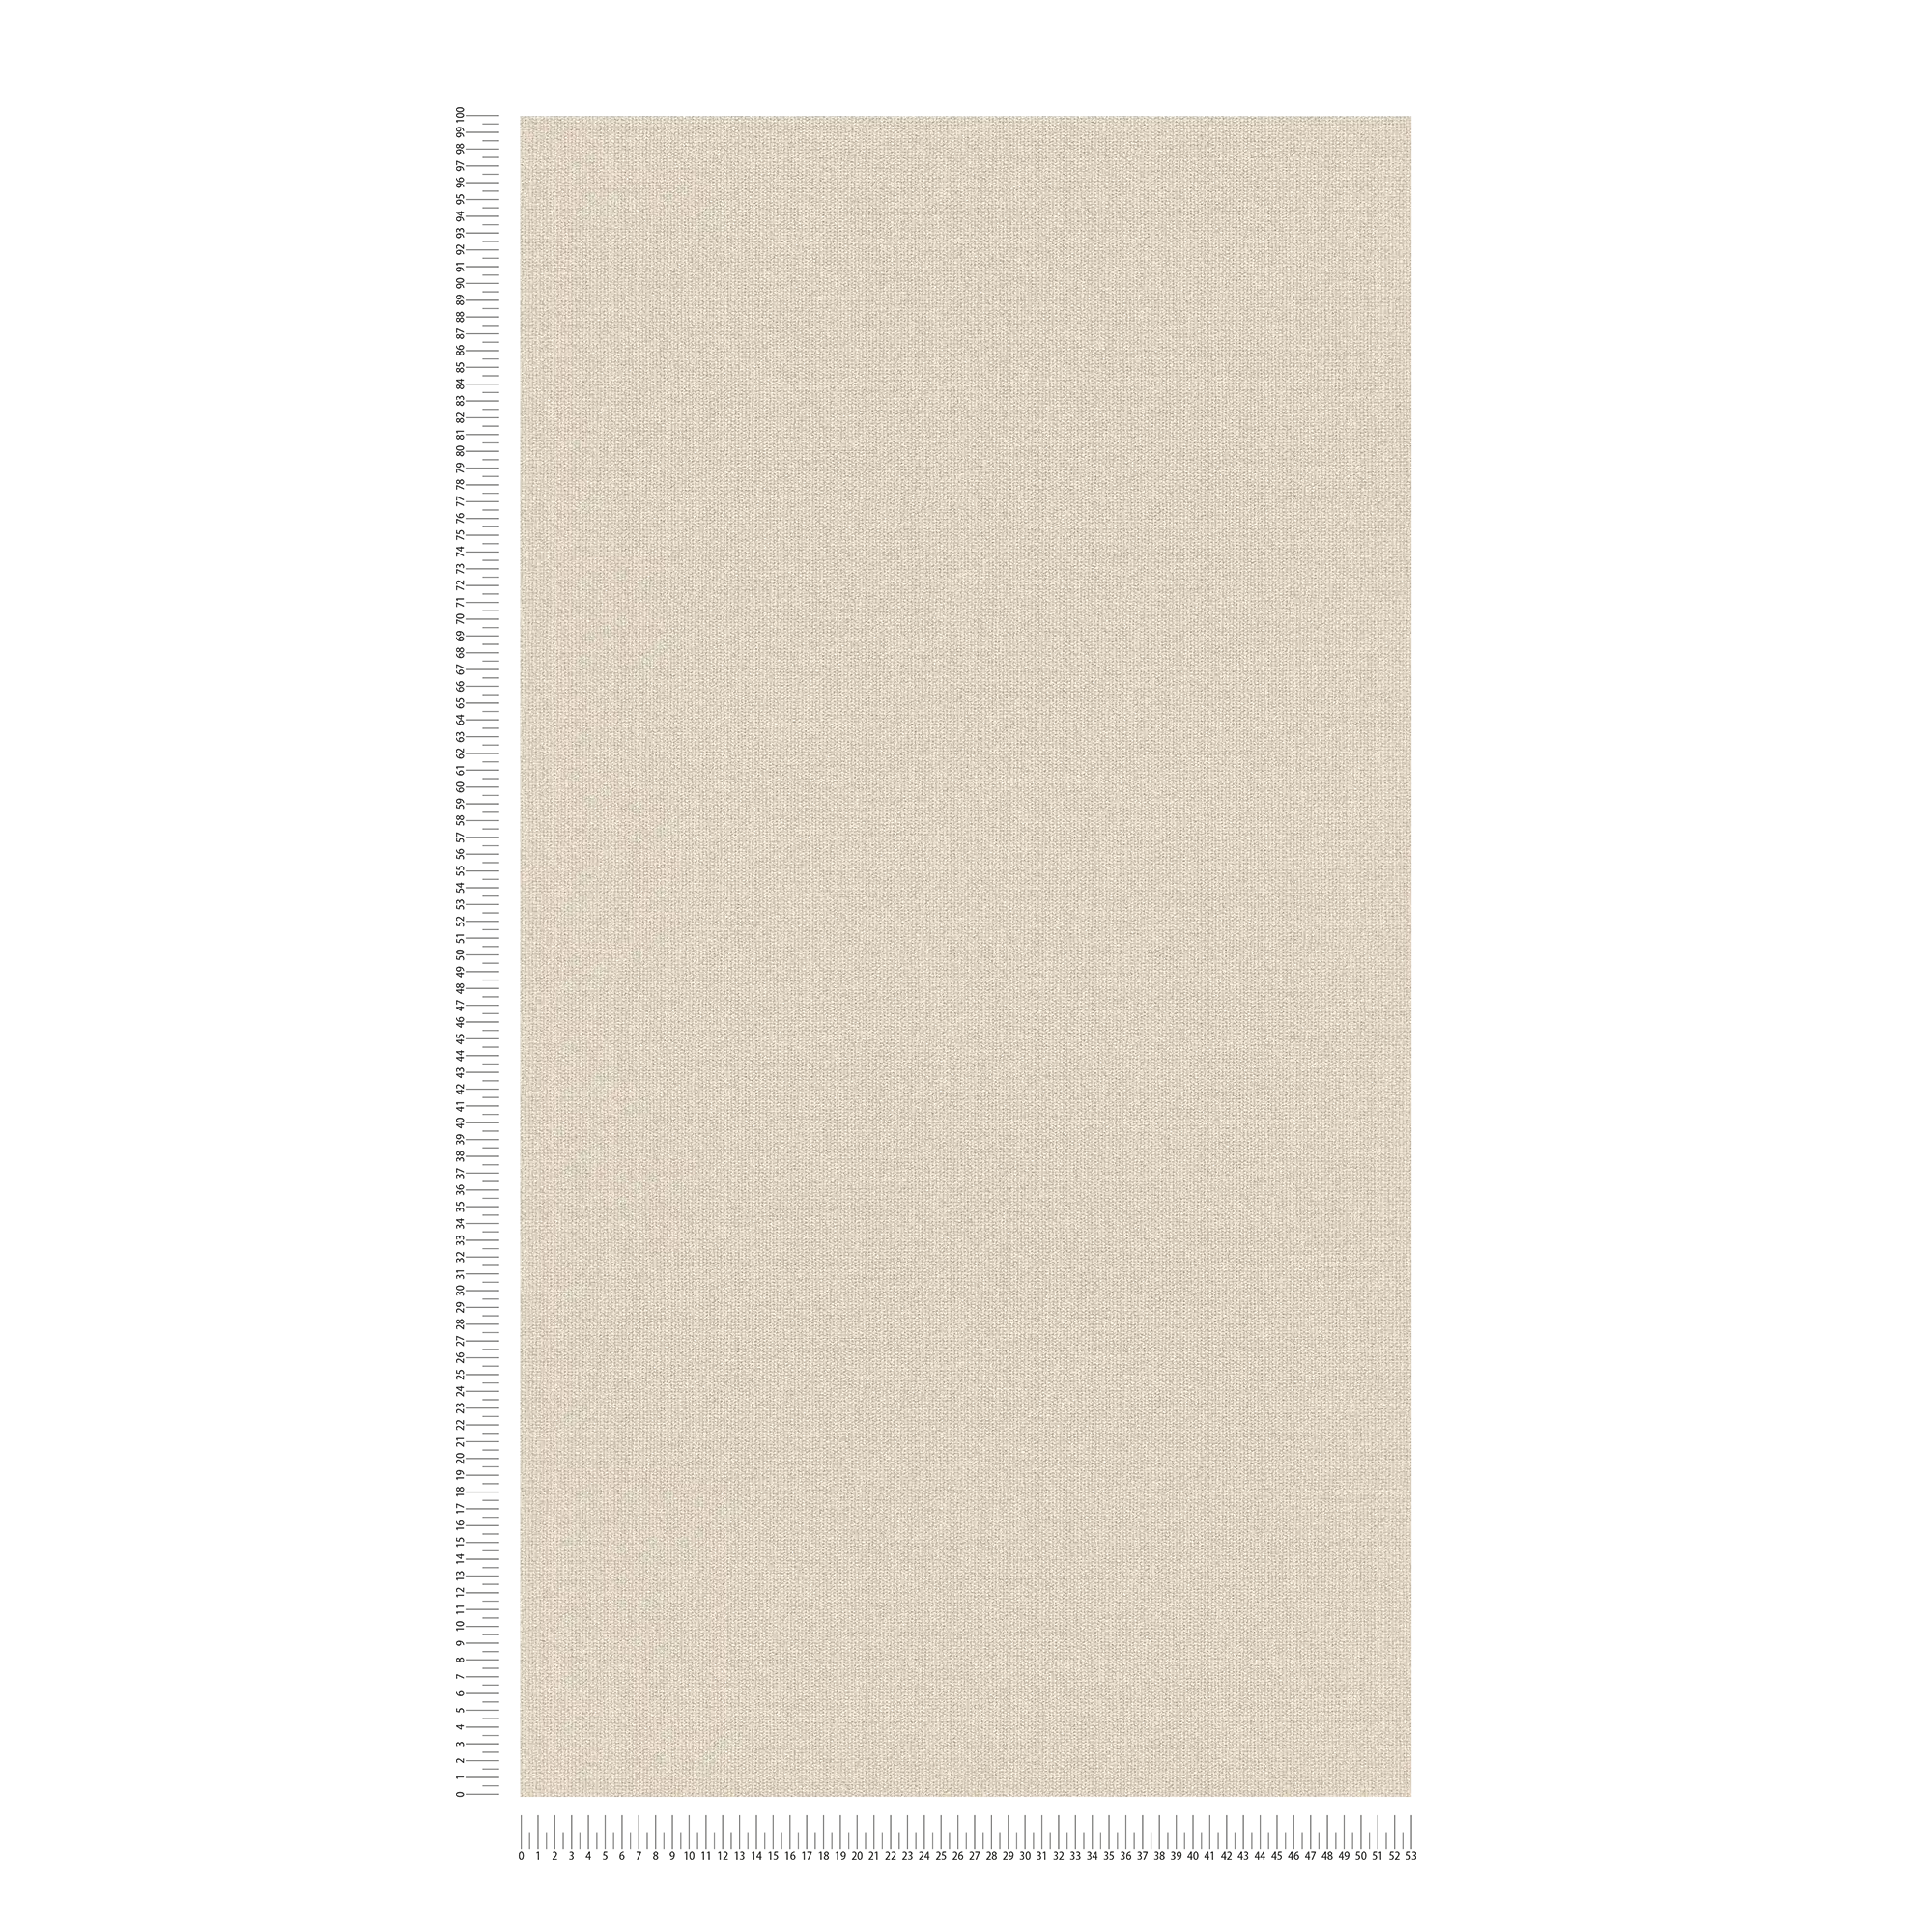             Non-woven wallpaper linen look with texture details, plain - cream, beige
        